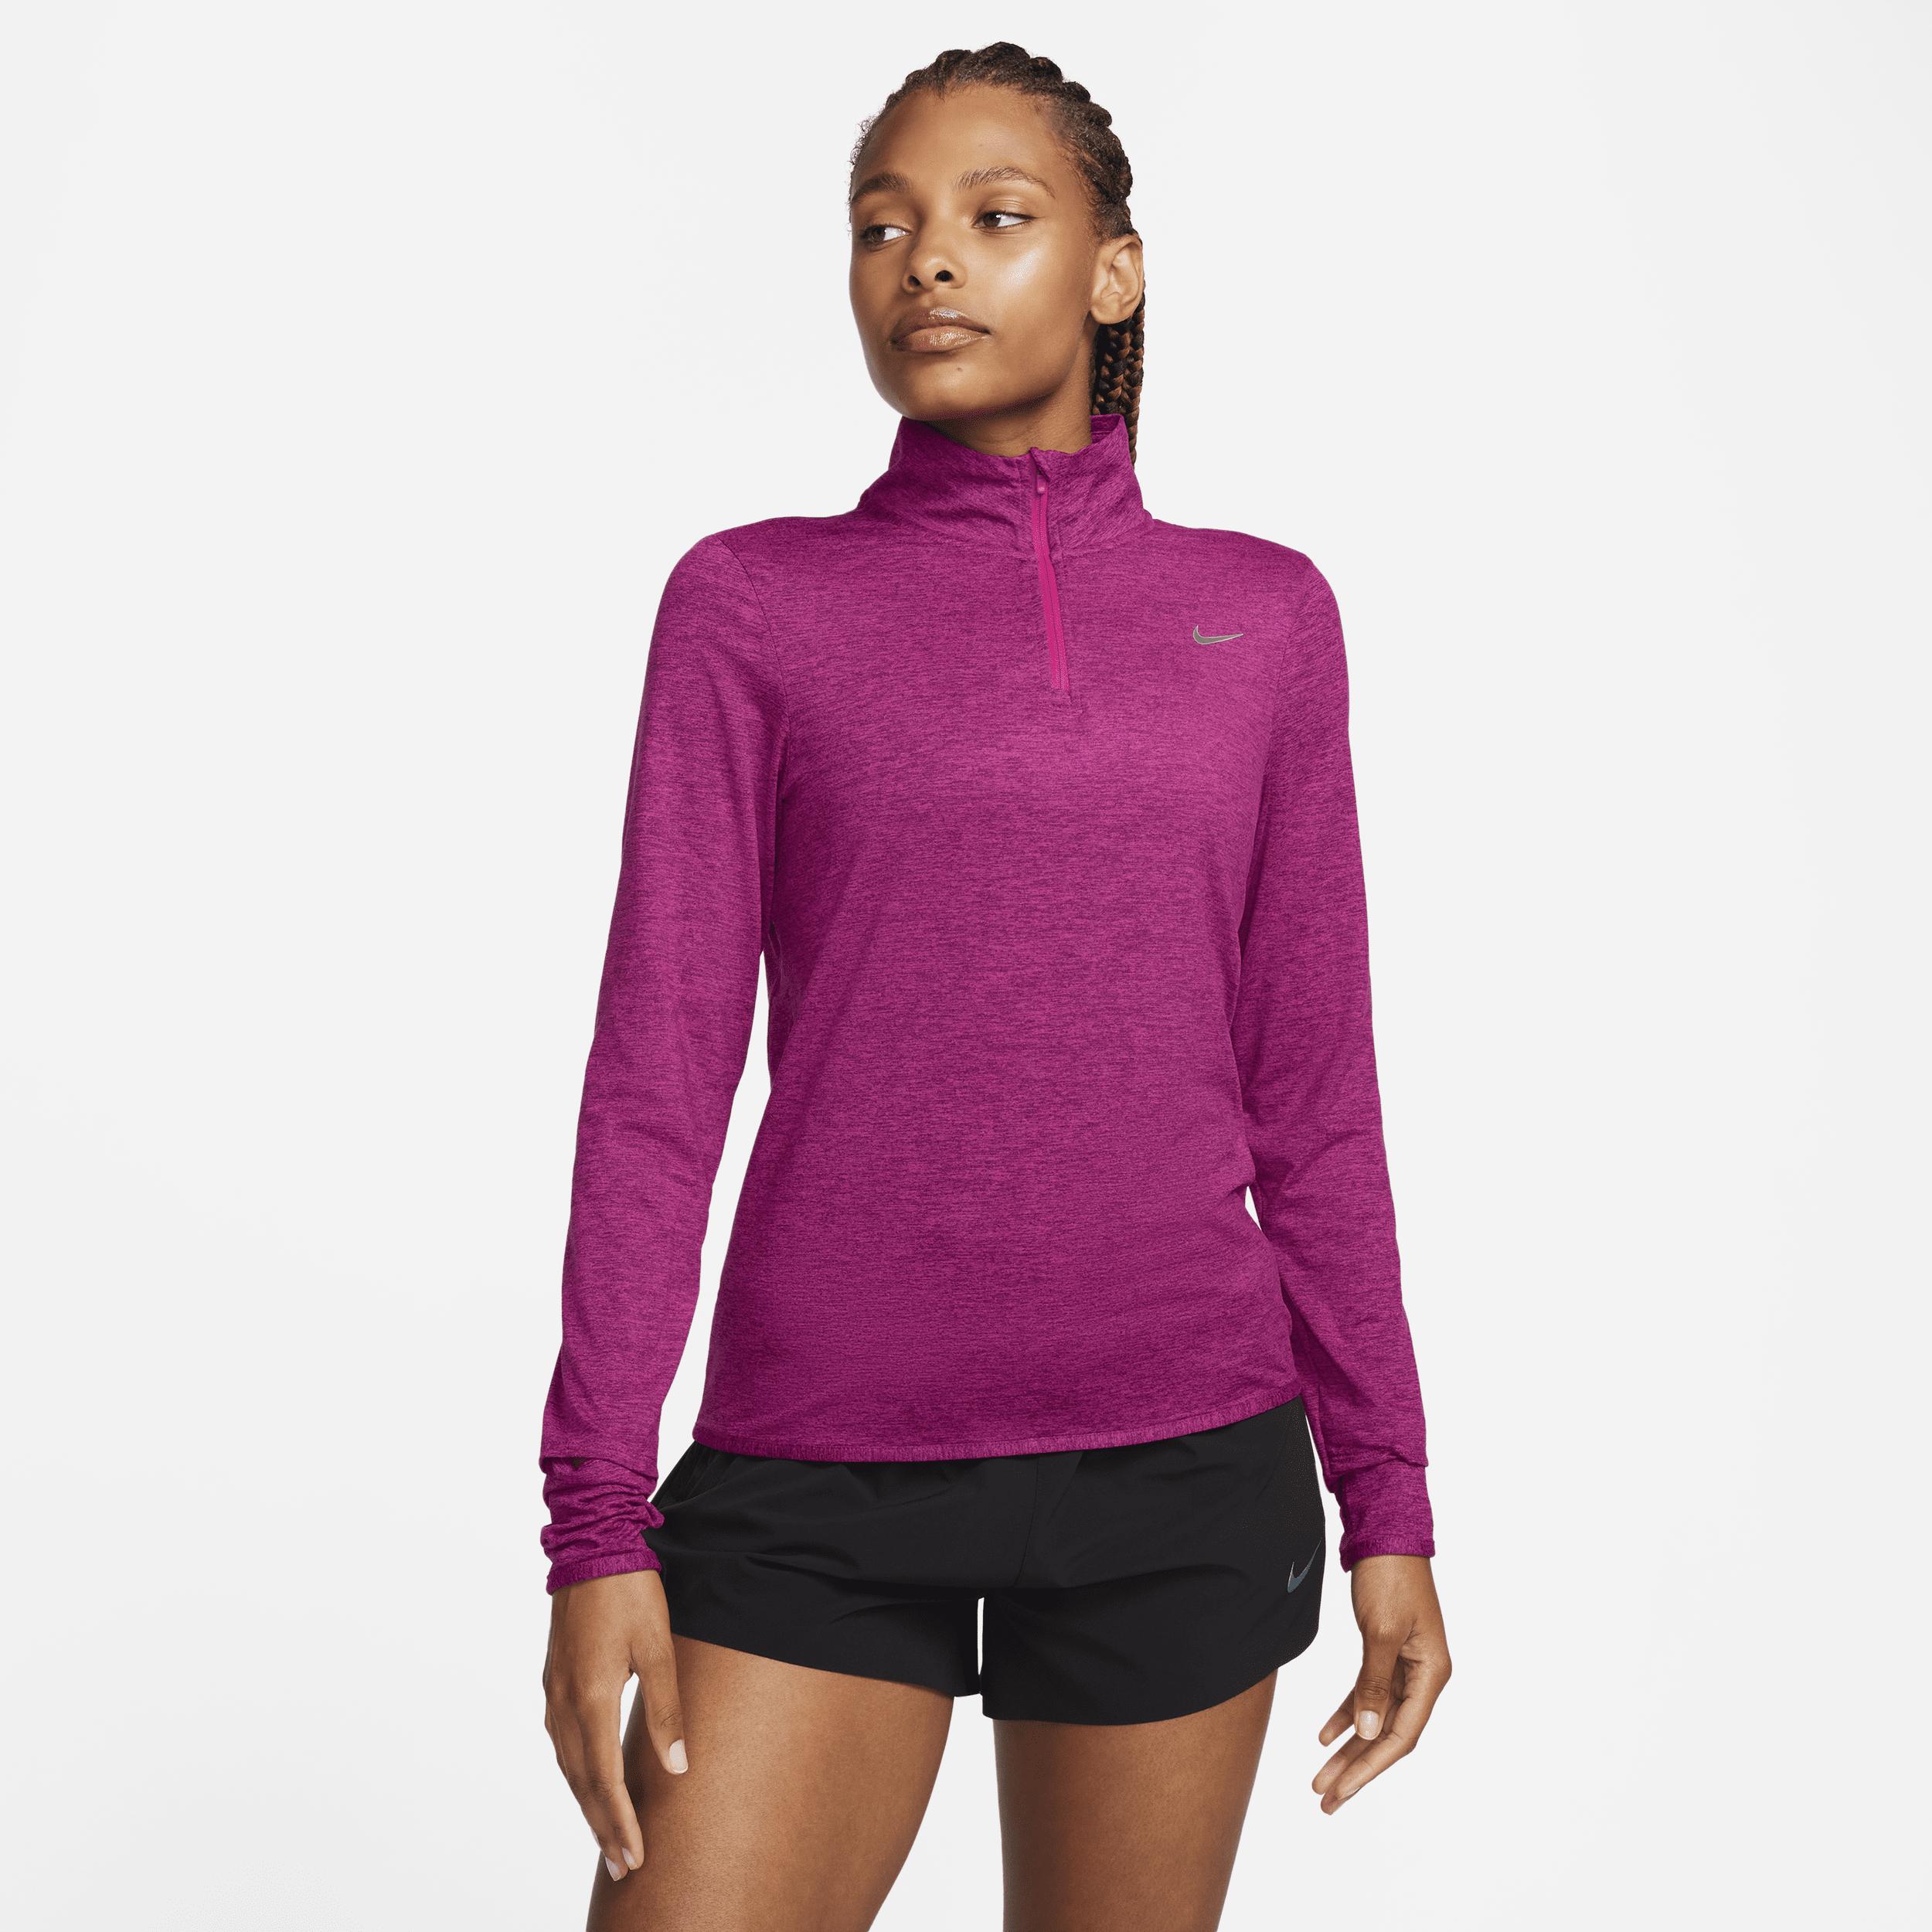 Nike Dri-fit Swift Element Uv 1/4-zip Running Top in Purple | Lyst